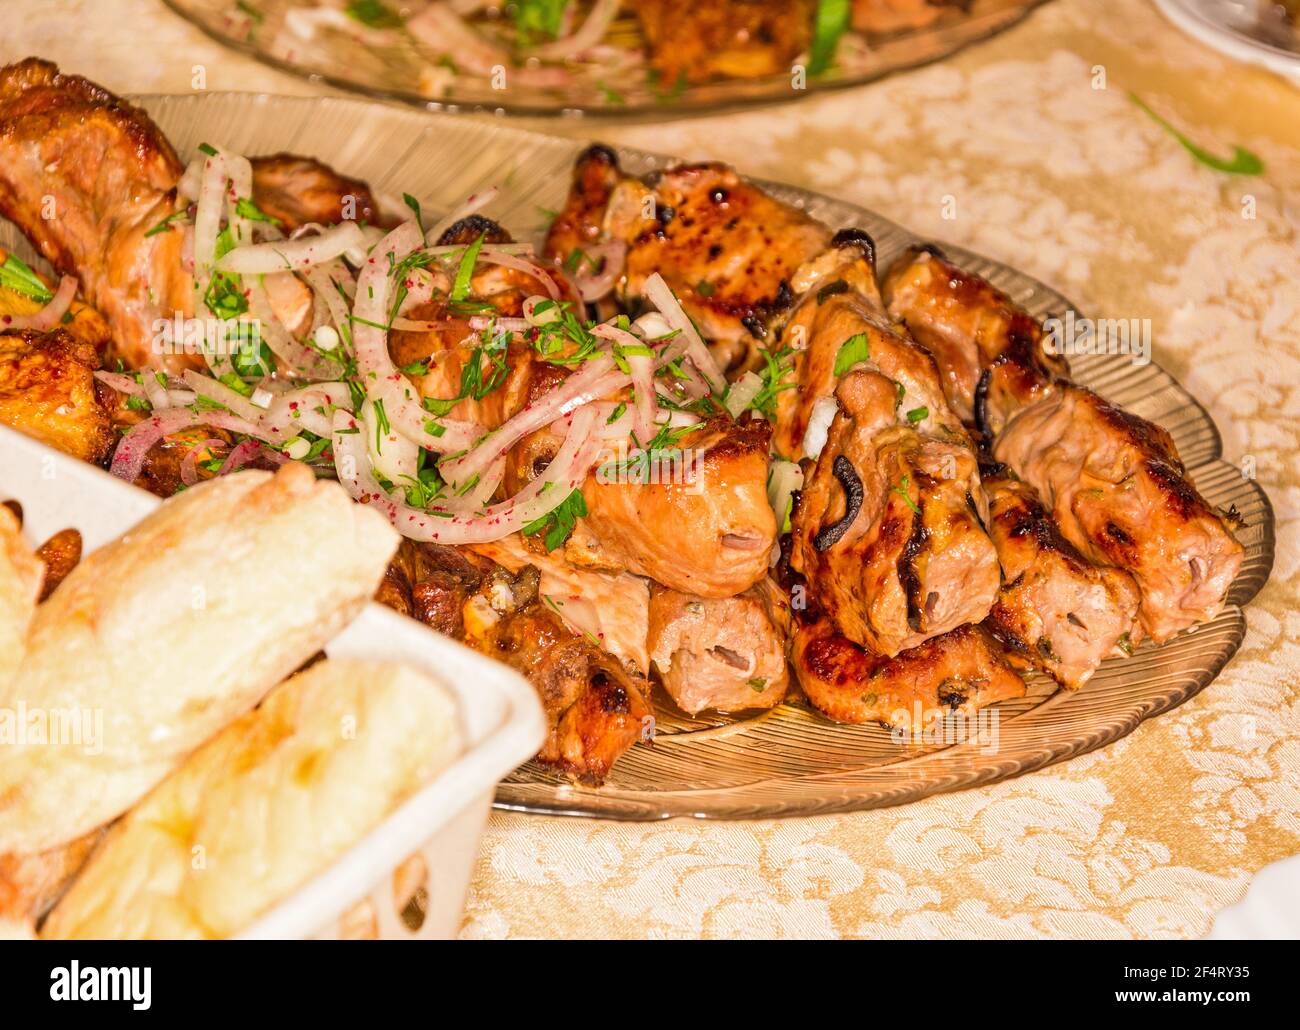 Kebab, viande brochée, barbecue, viande grillée et légumes Banque D'Images